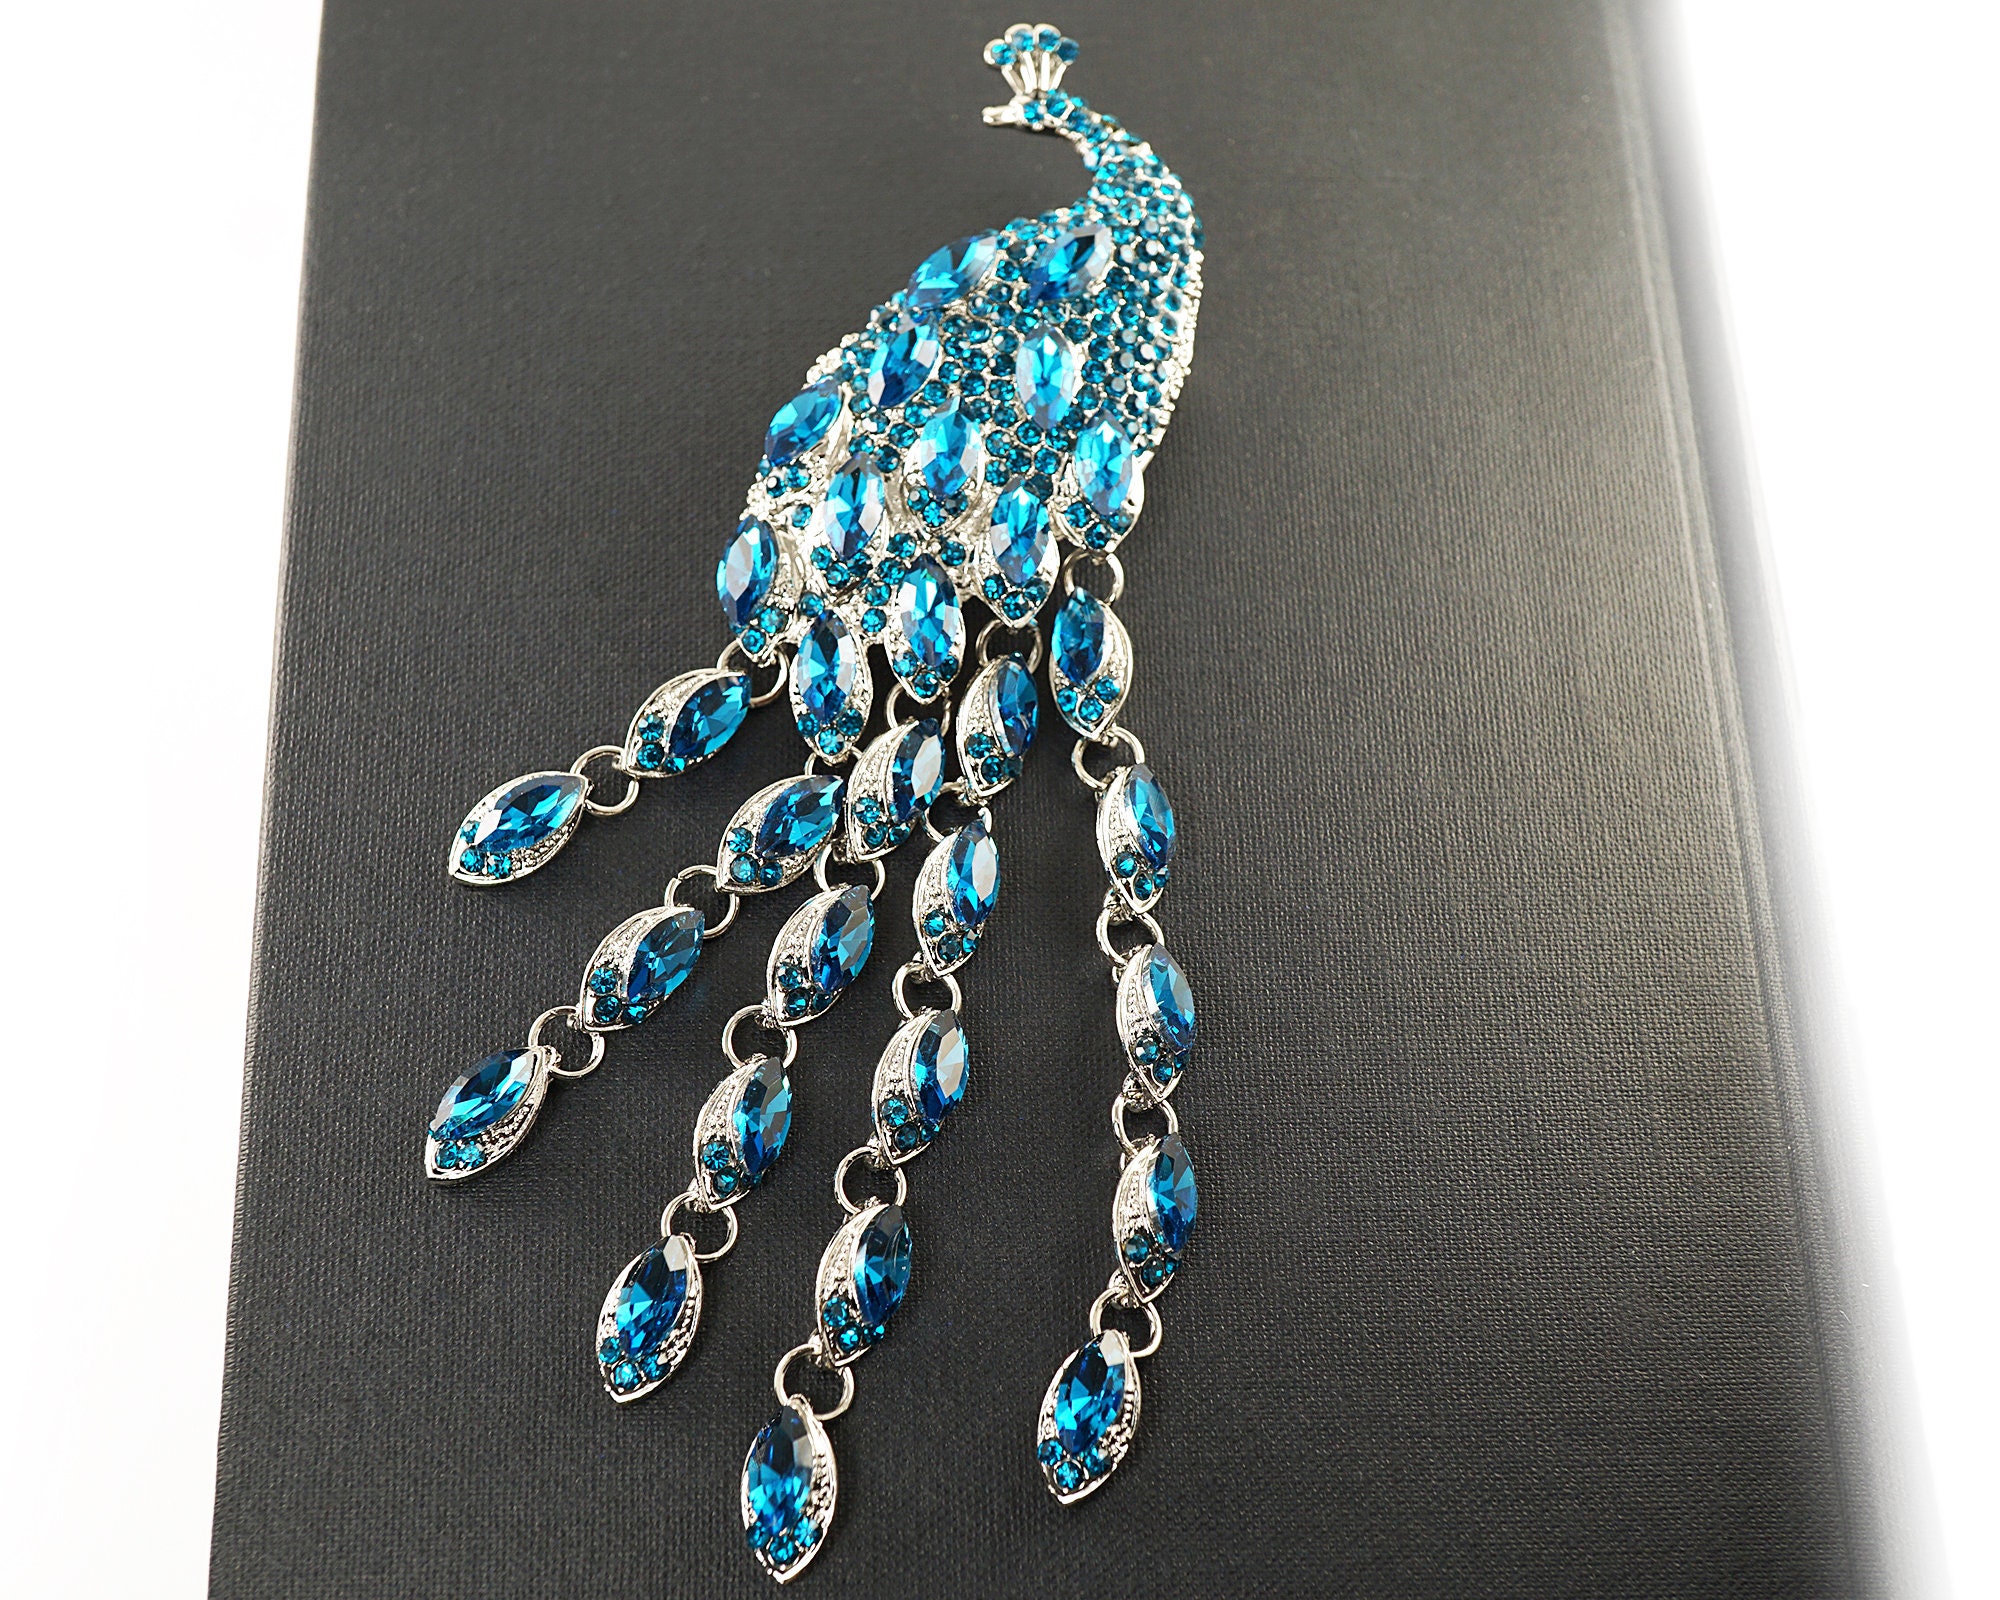 Rhinestone Peacock Brooches for Women Animal Brooch Pin Elegant  Accessories☆